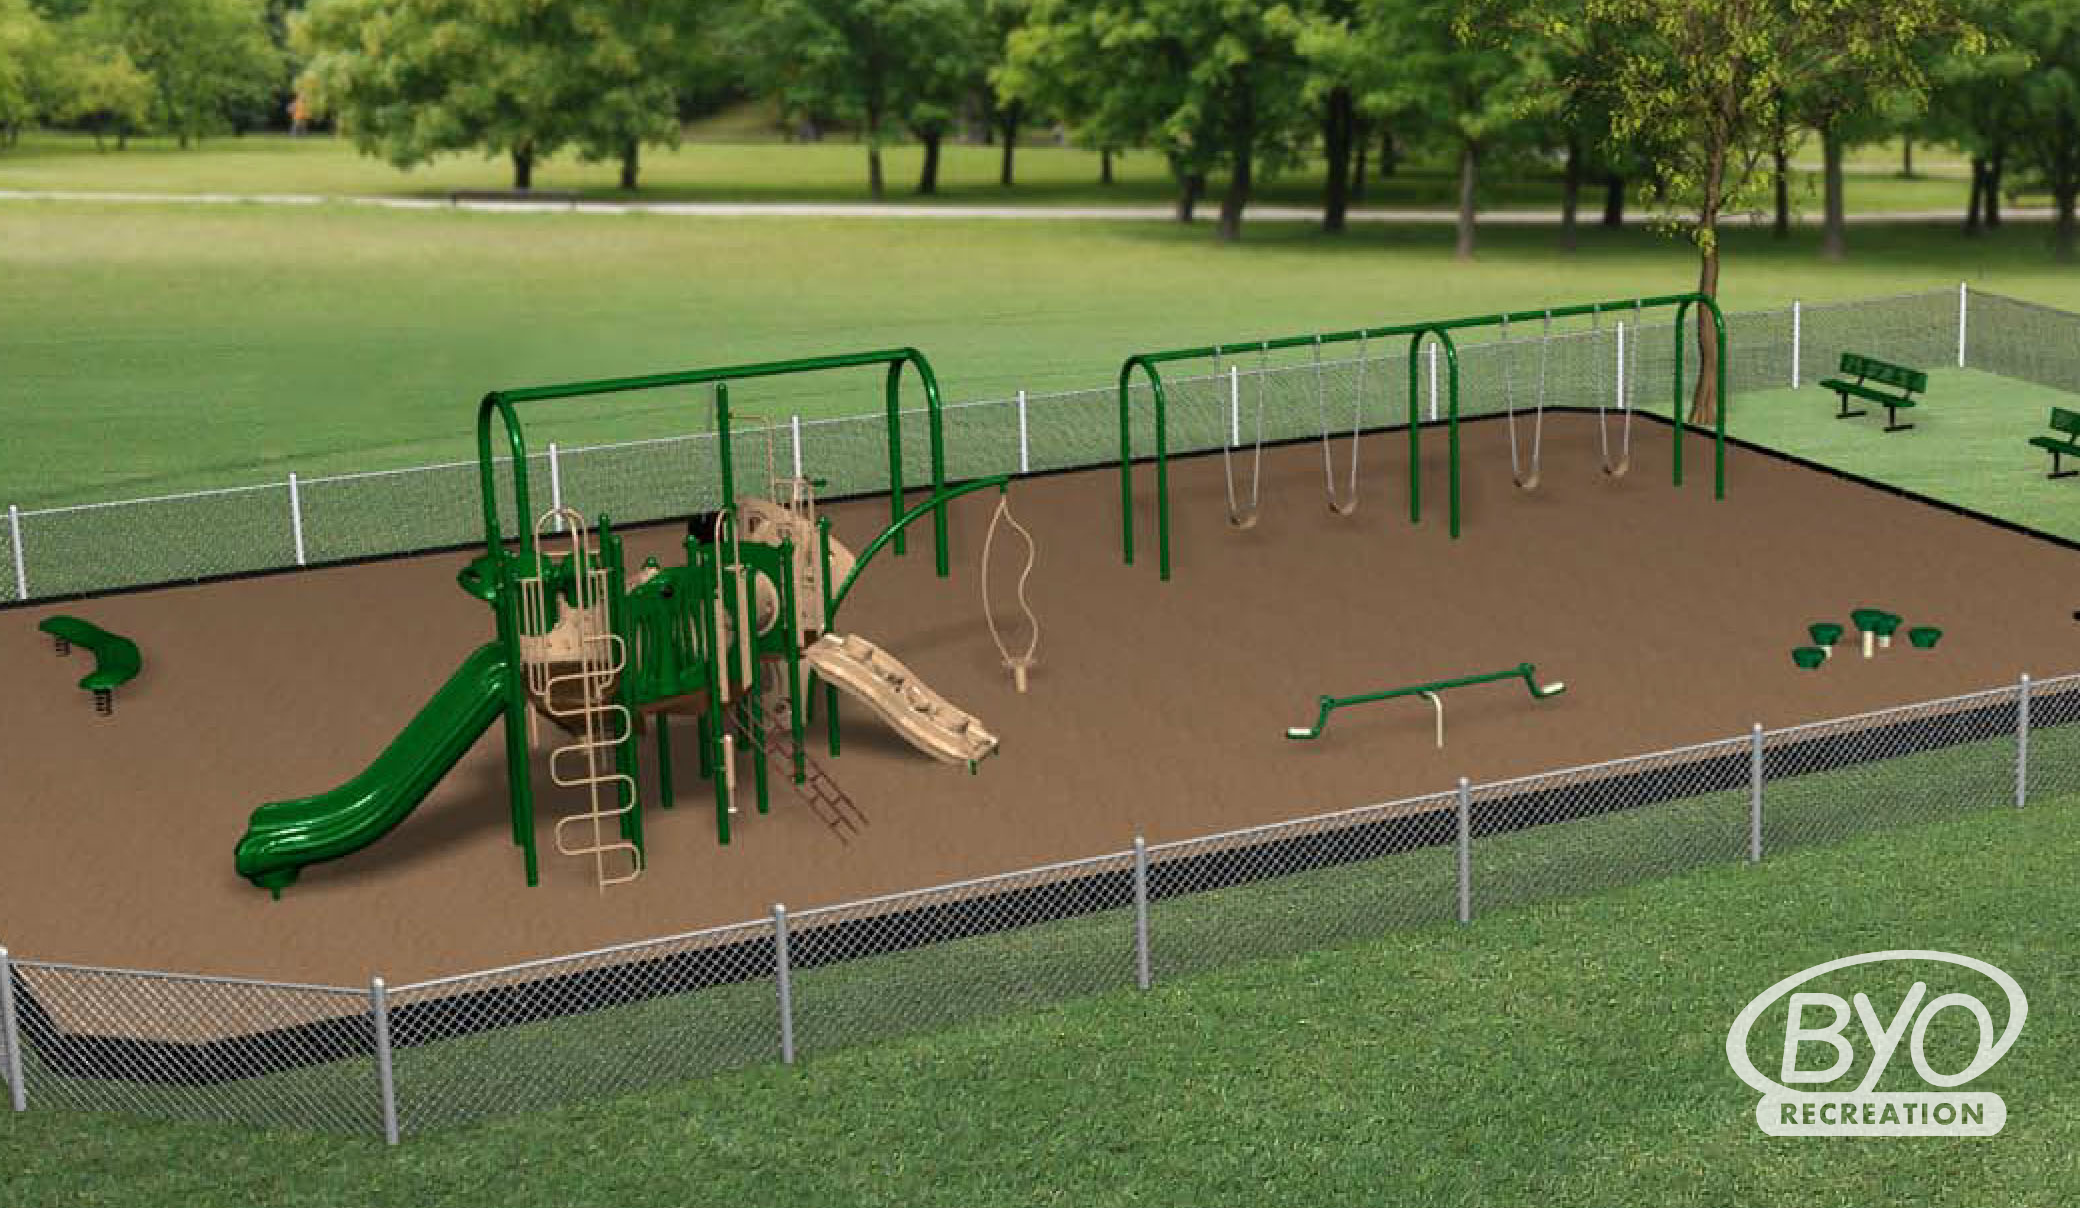 Adaptive playground design demonstrates JSA's focus on group play.